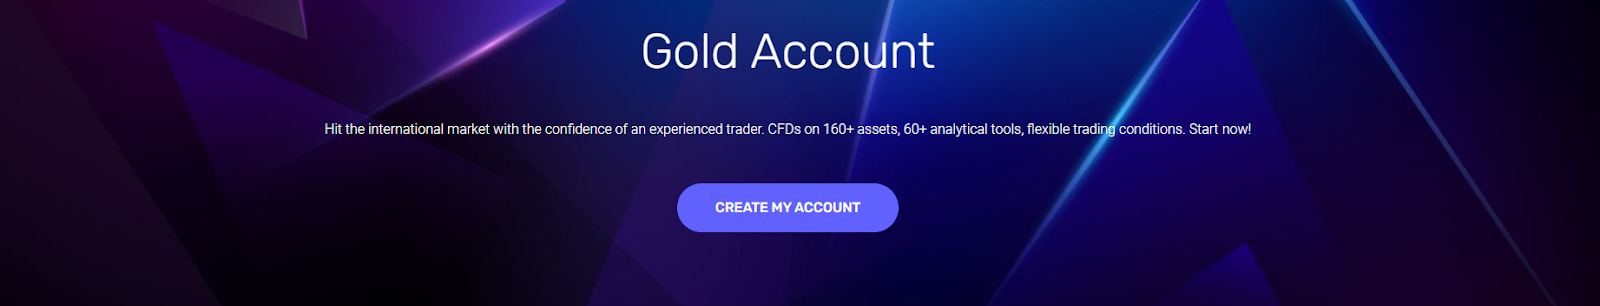 ModMount Gold Account